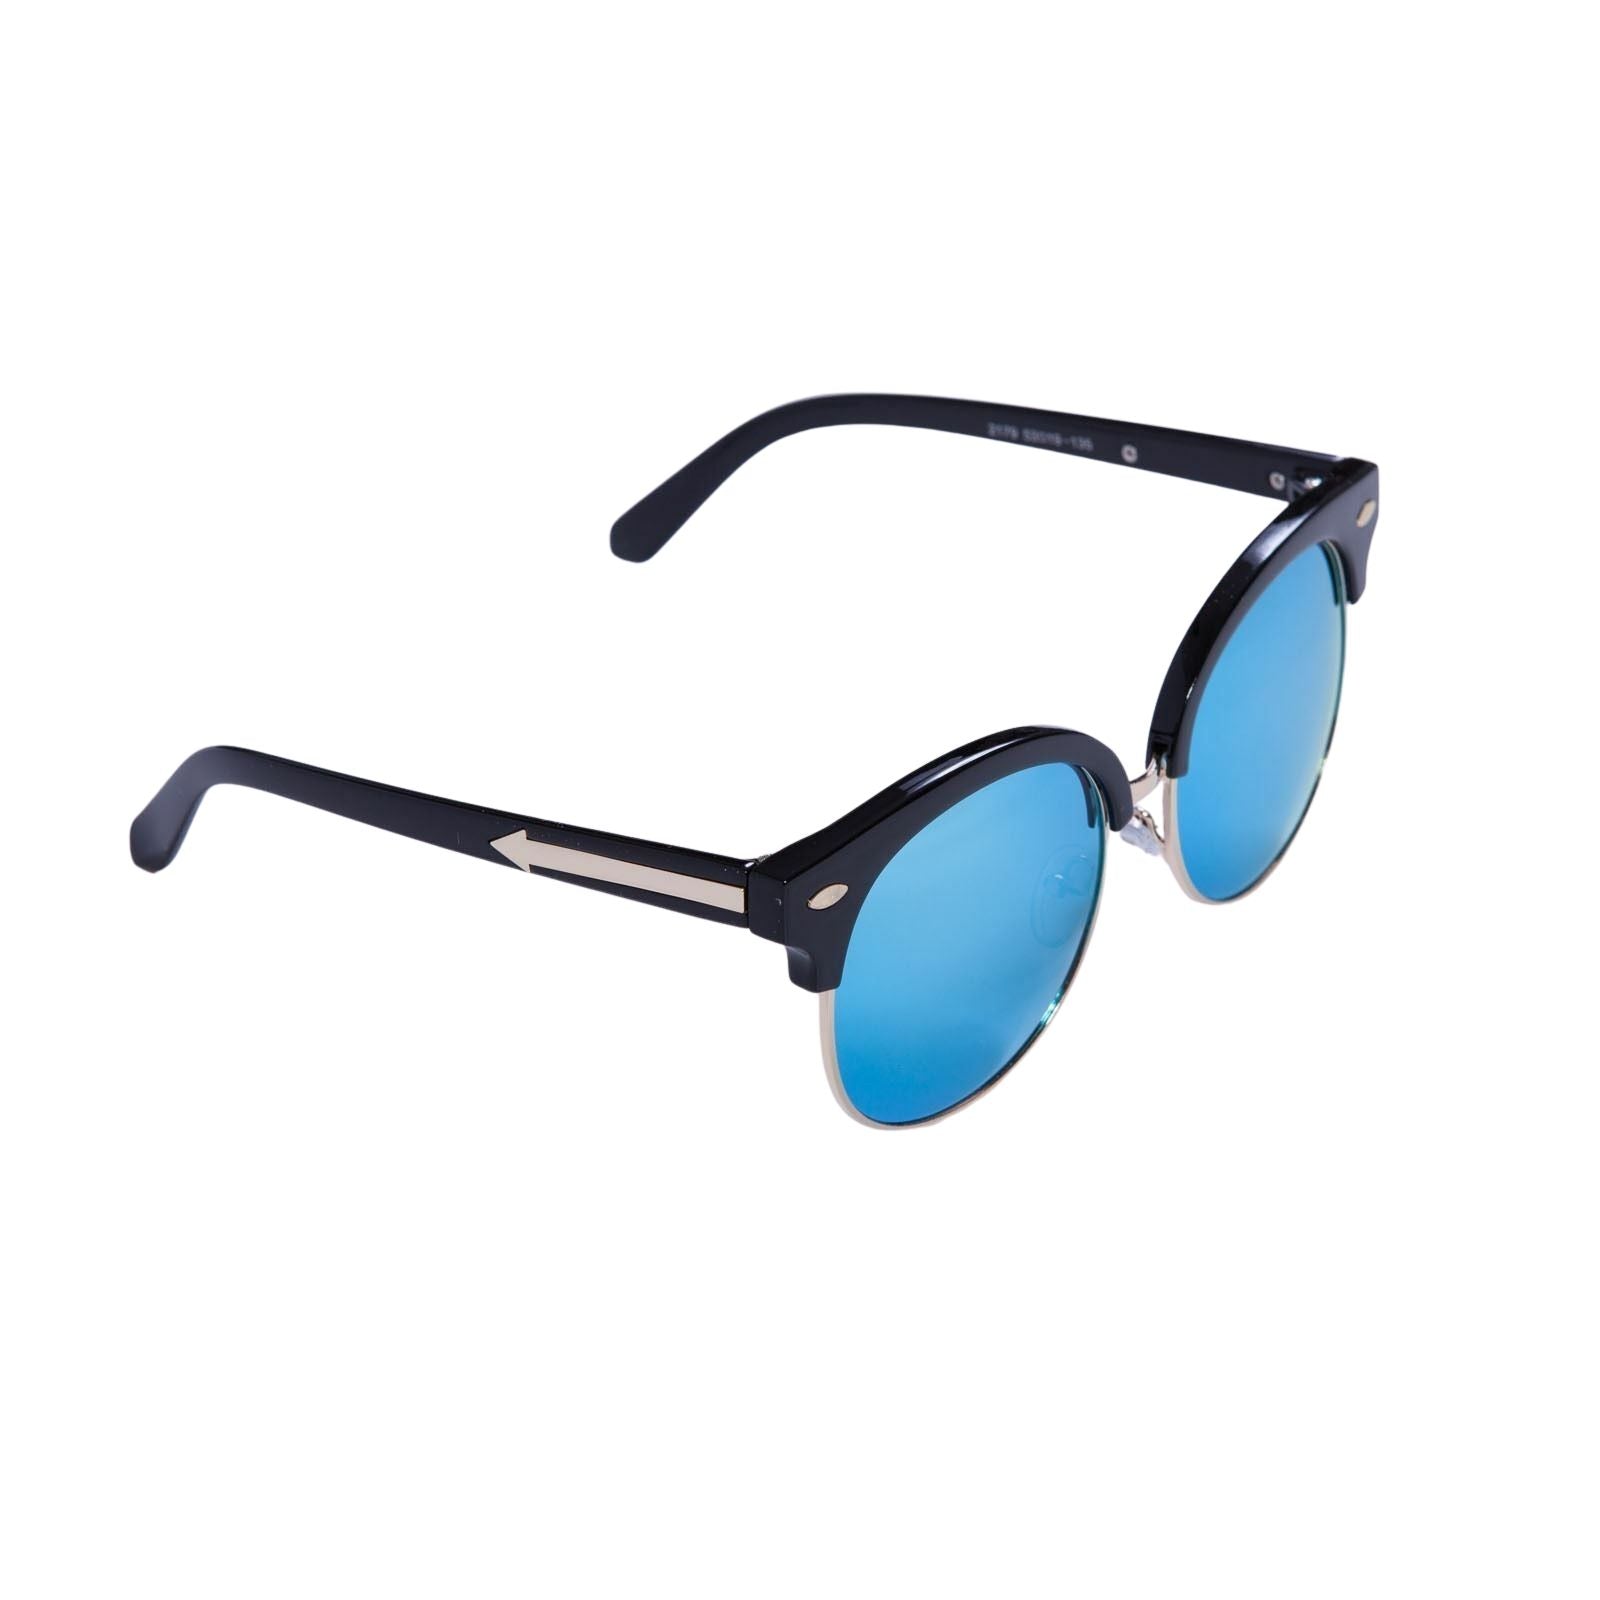 New Womens Mens Blue Reflective Lens Retro Sunglasses Unisex Fashion Black Frame - Pantsnsox